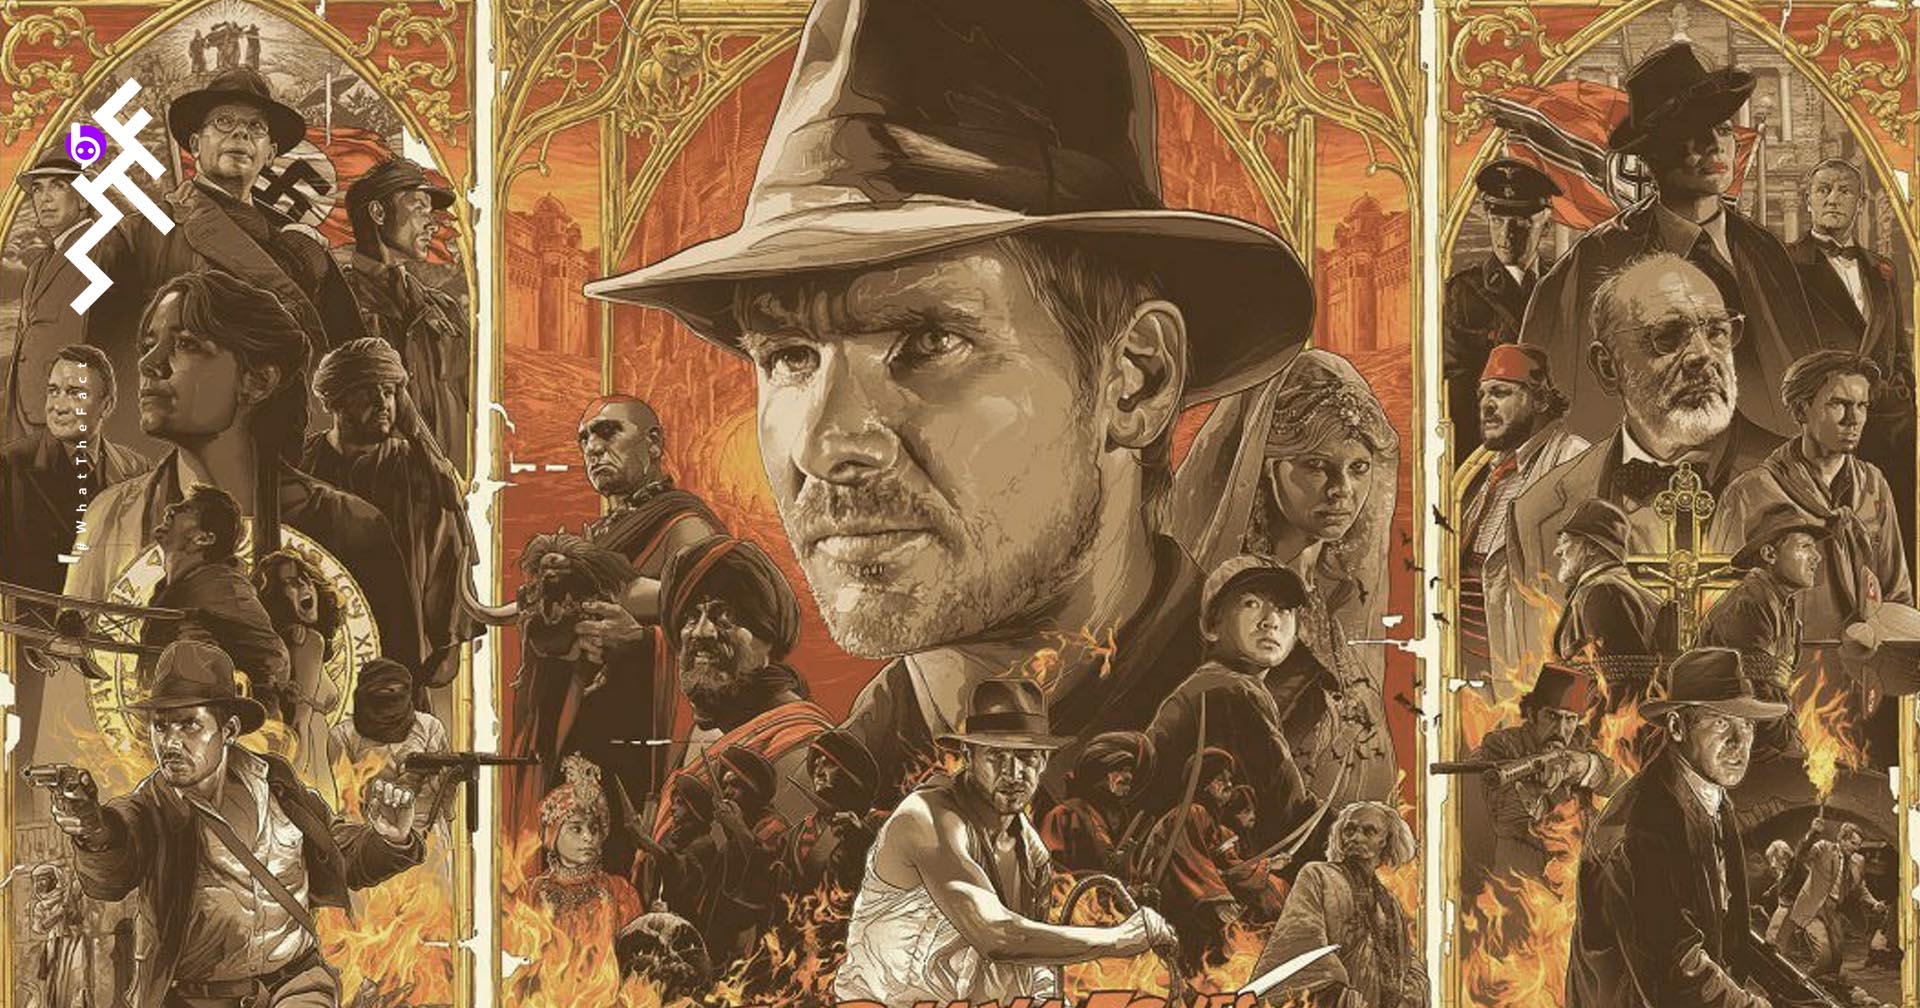 Indiana Jones ภาค 5 จะฉายปี 2022 และเป็นภาคสุดท้ายแล้ว